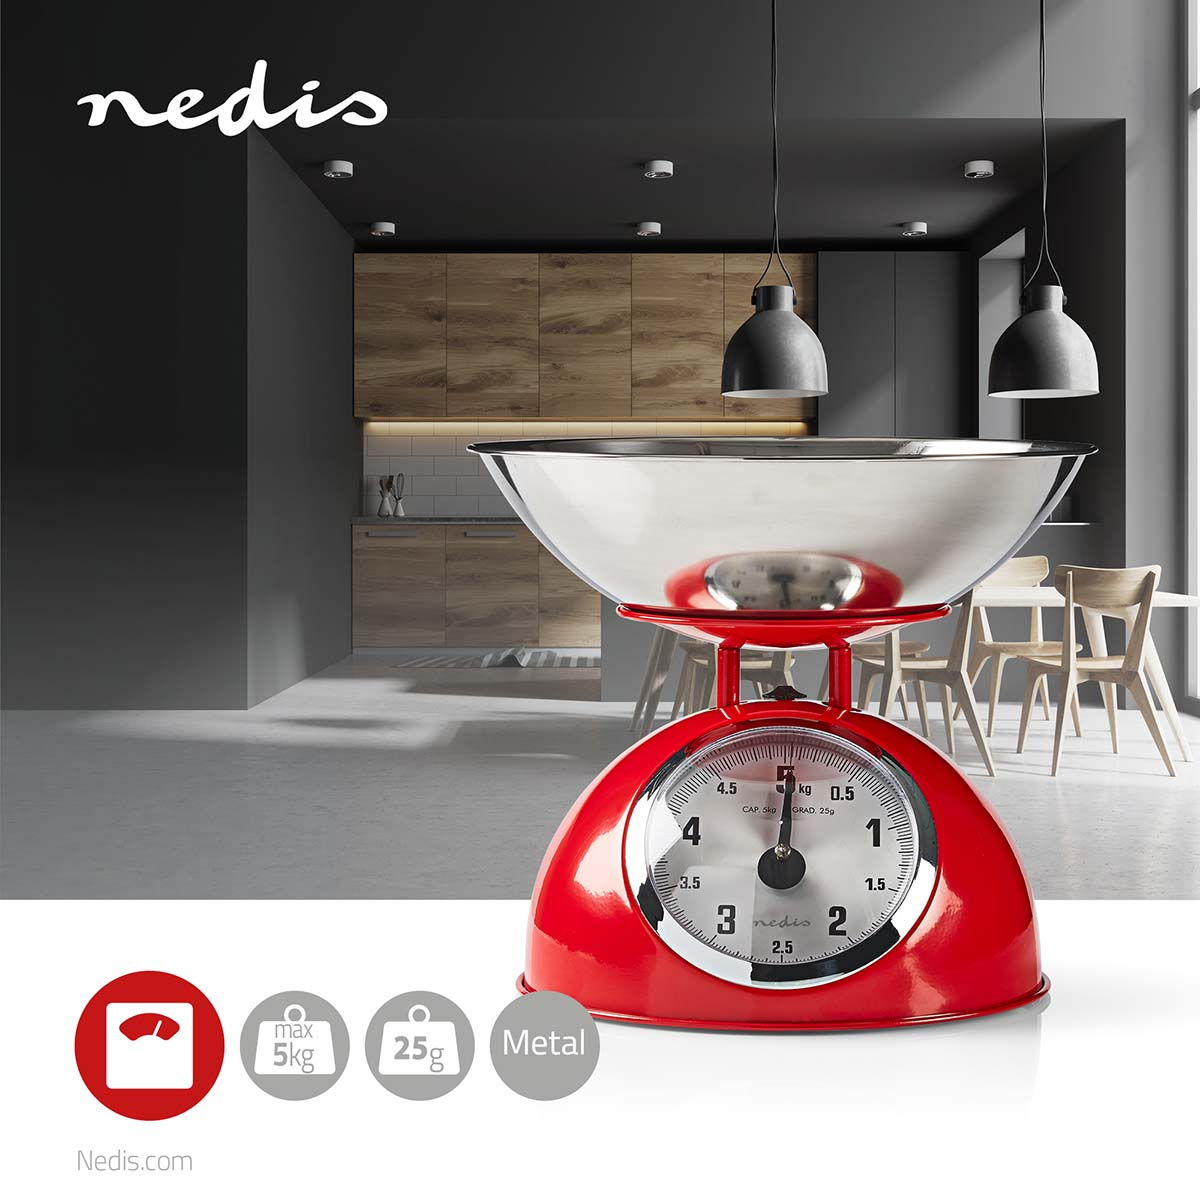 Nedis KASC110RD Küchenwaage Analog | Edelstahl | Abnehmbare Schale | Red